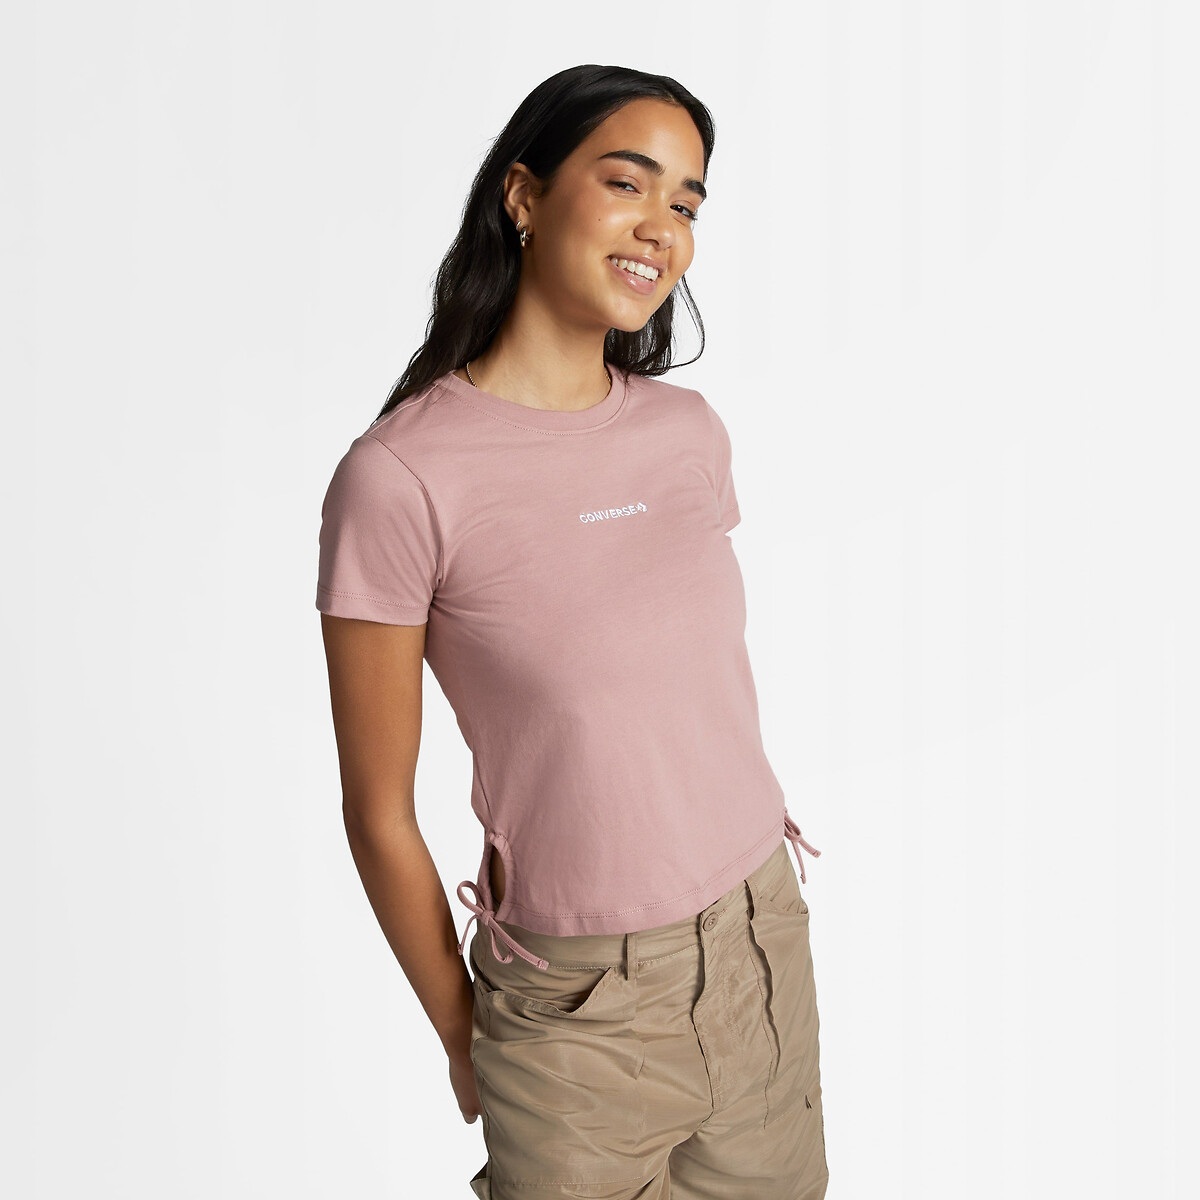 T-shirt wordmark fashion Converse | La novelty Redoute rosa